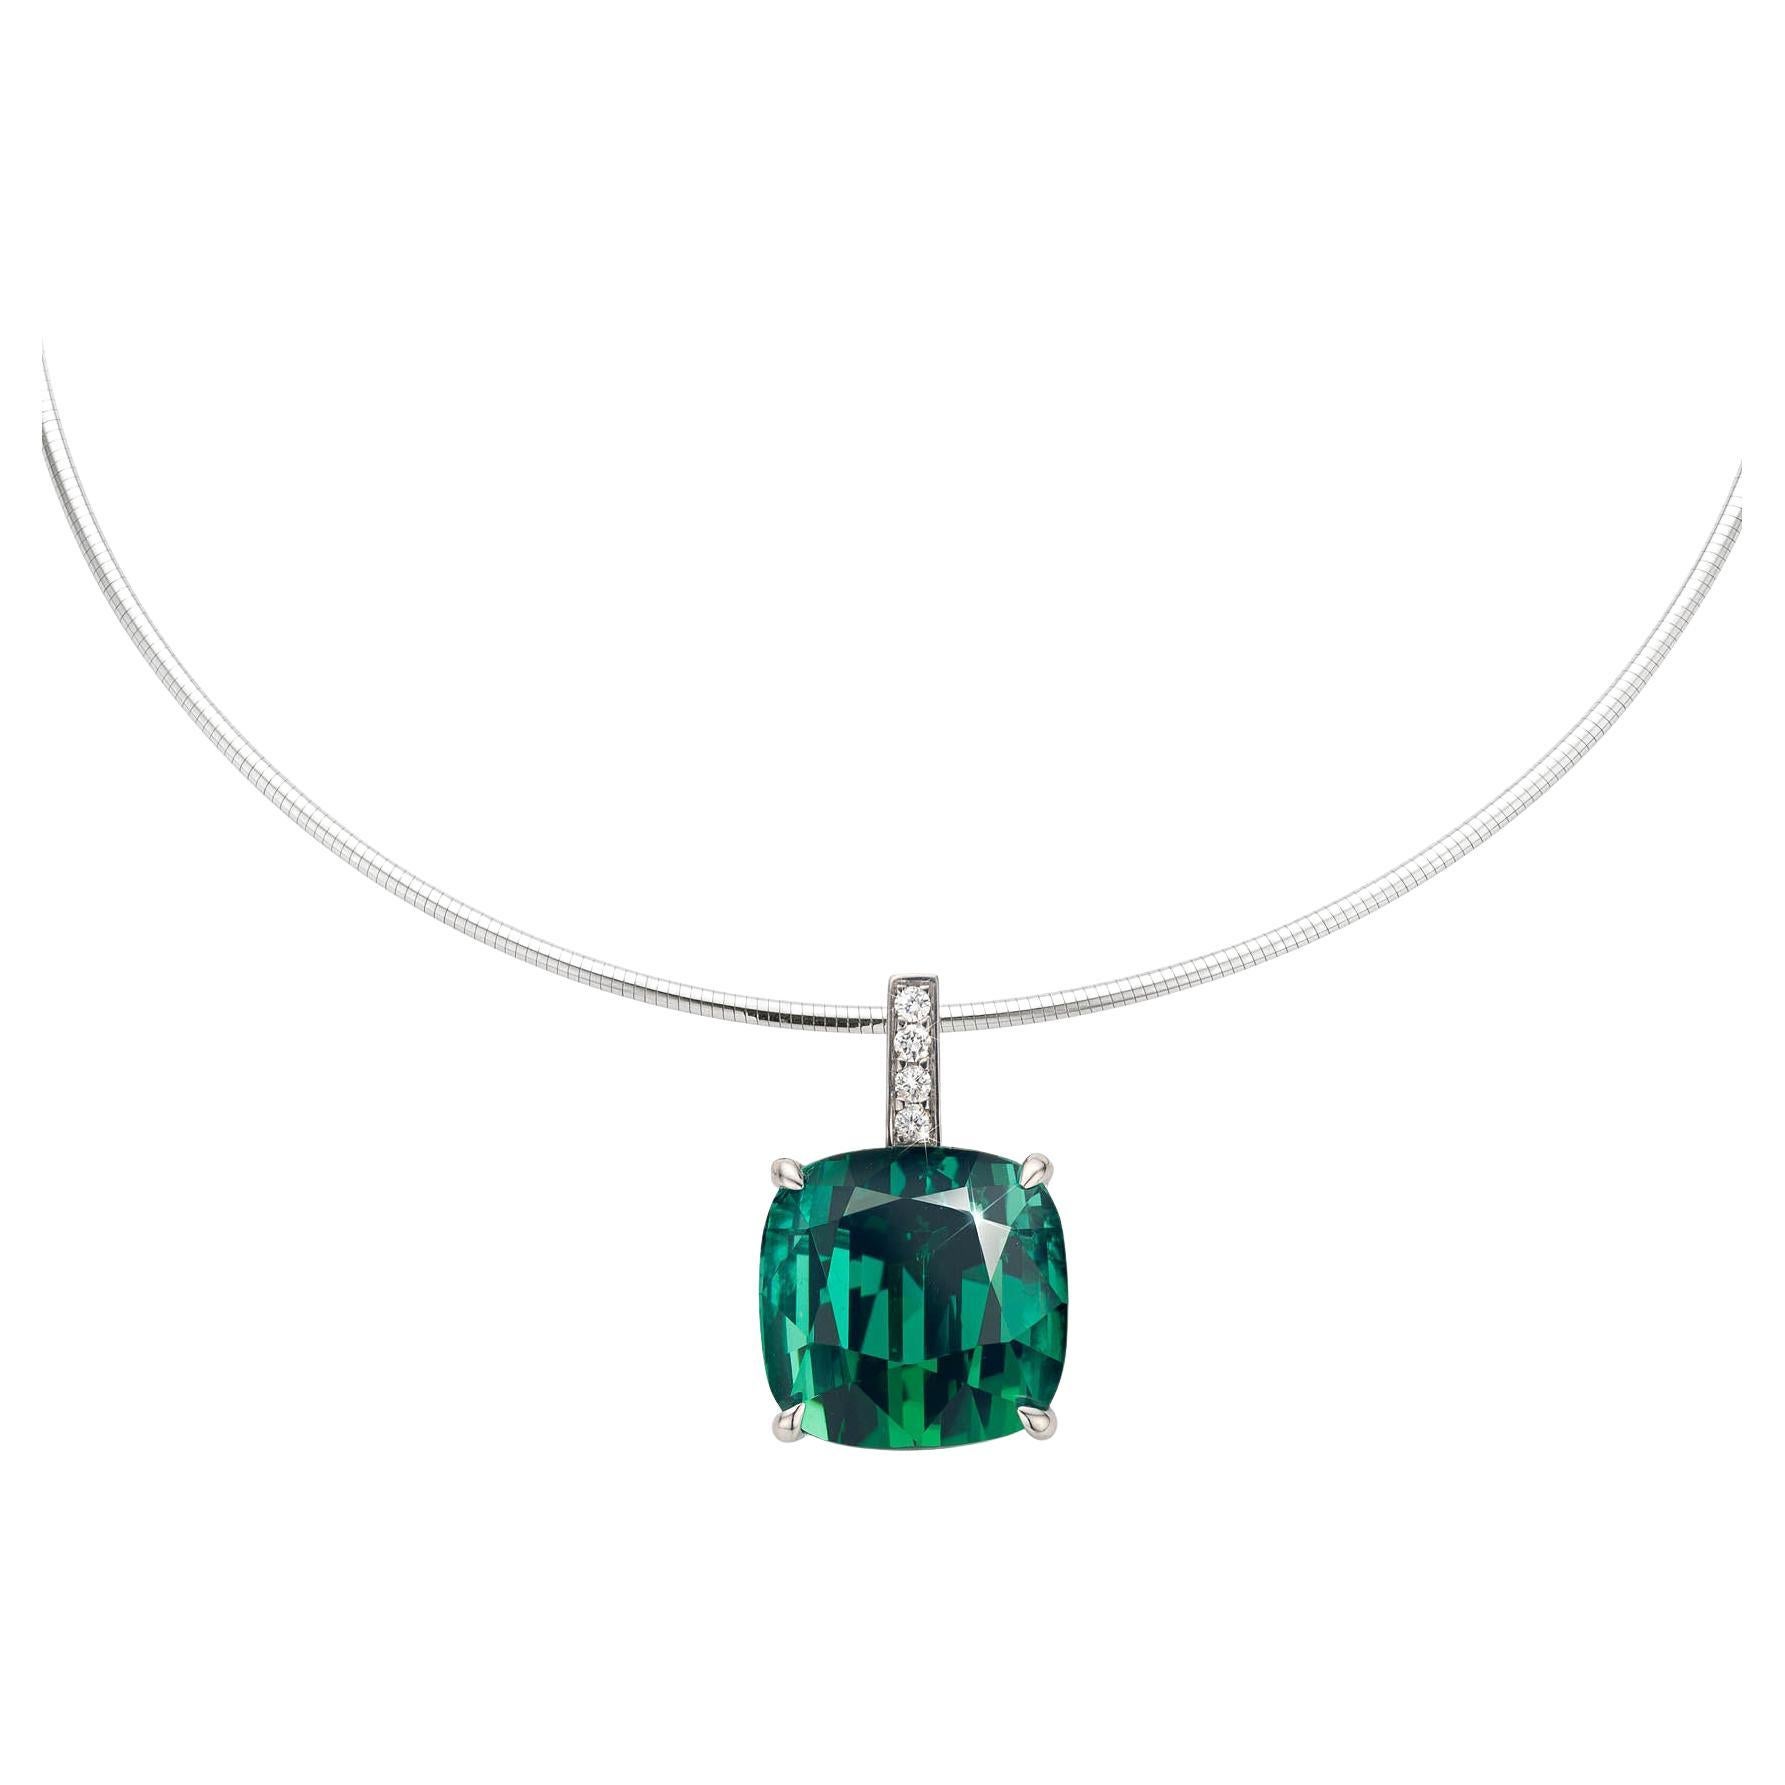 Cober “Bright green” with a 9.40 Carat green Tourmaline and Diamonds Pendant